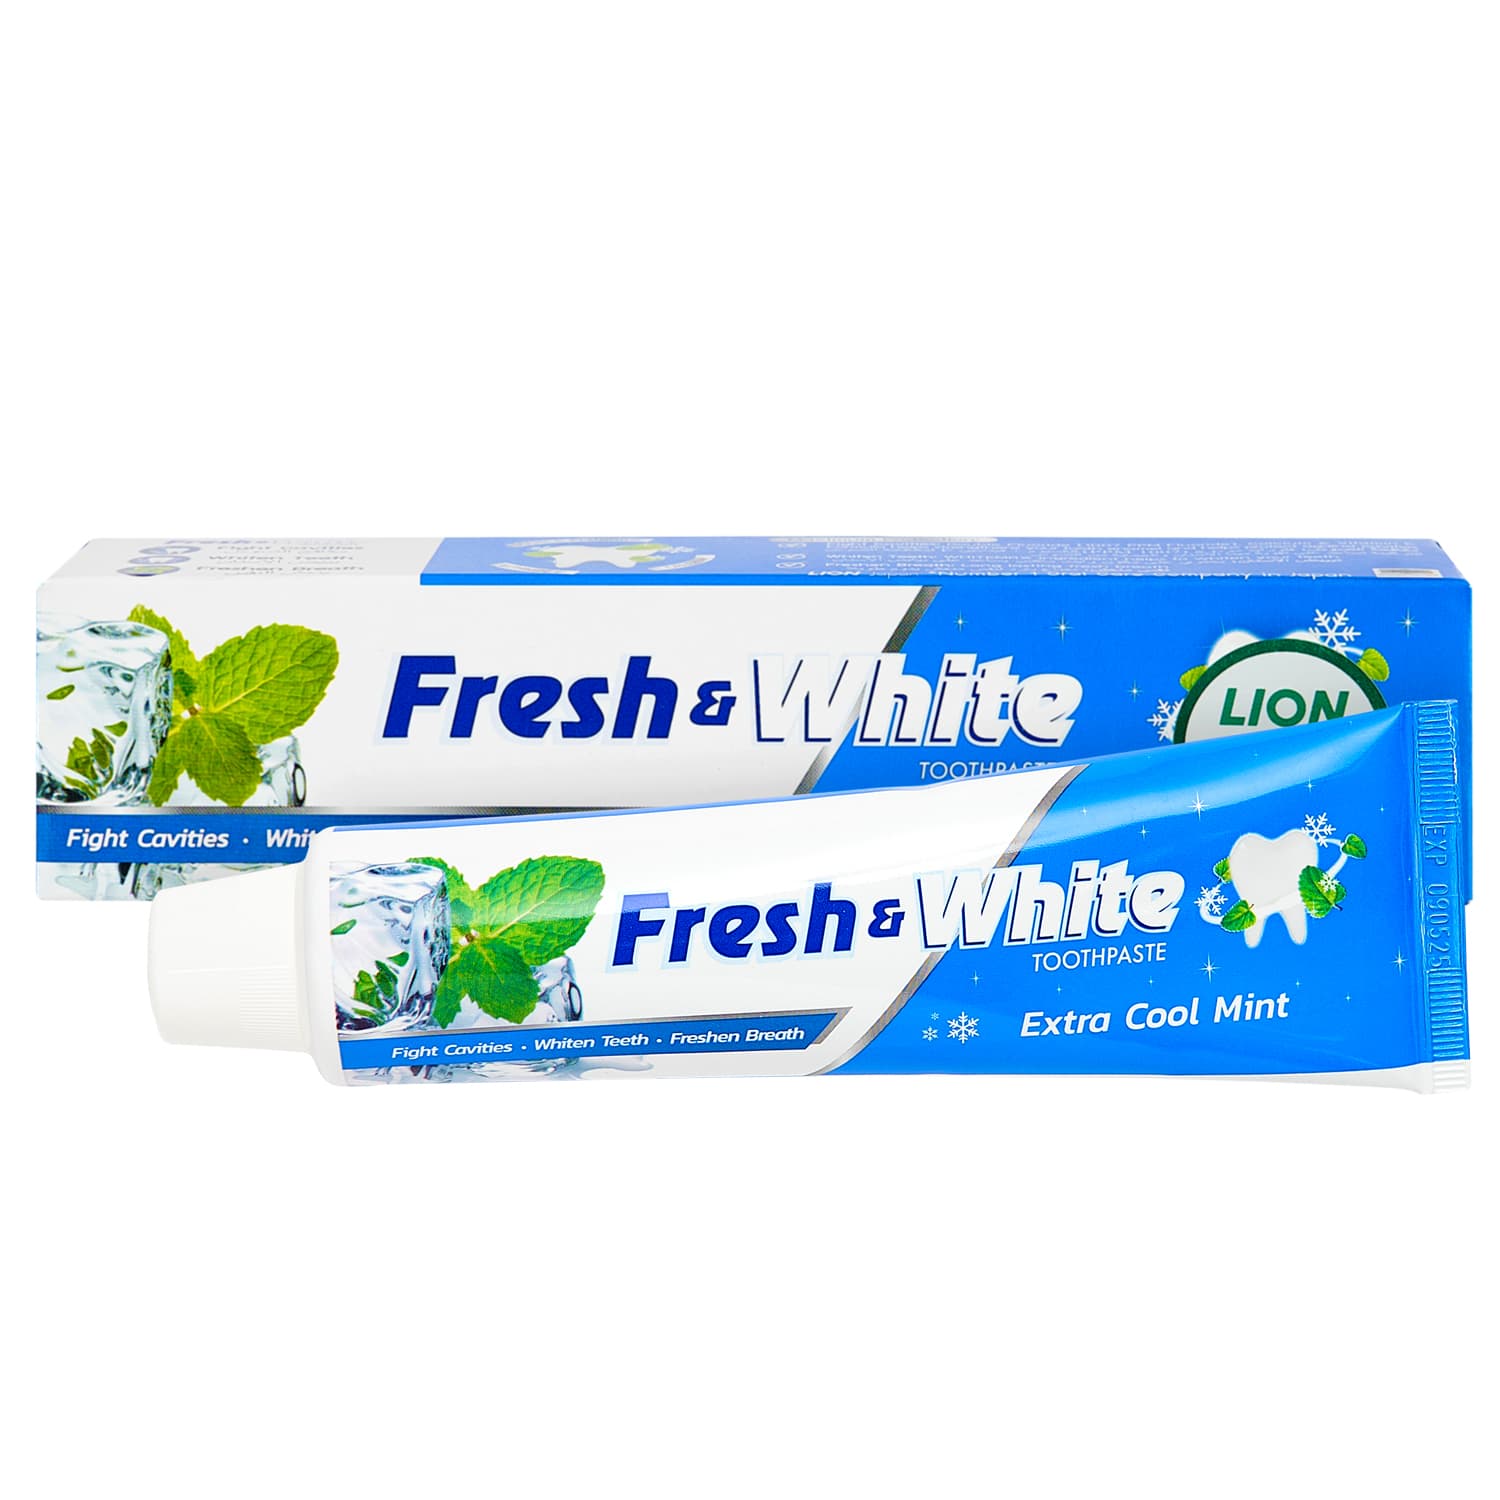 Lion Thailand Отбеливающая зубная паста Суперпрохладная мята, 160 г (Lion Thailand, Fresh & White) уход за полостью рта жемчужная prof зубная паста отбеливающая